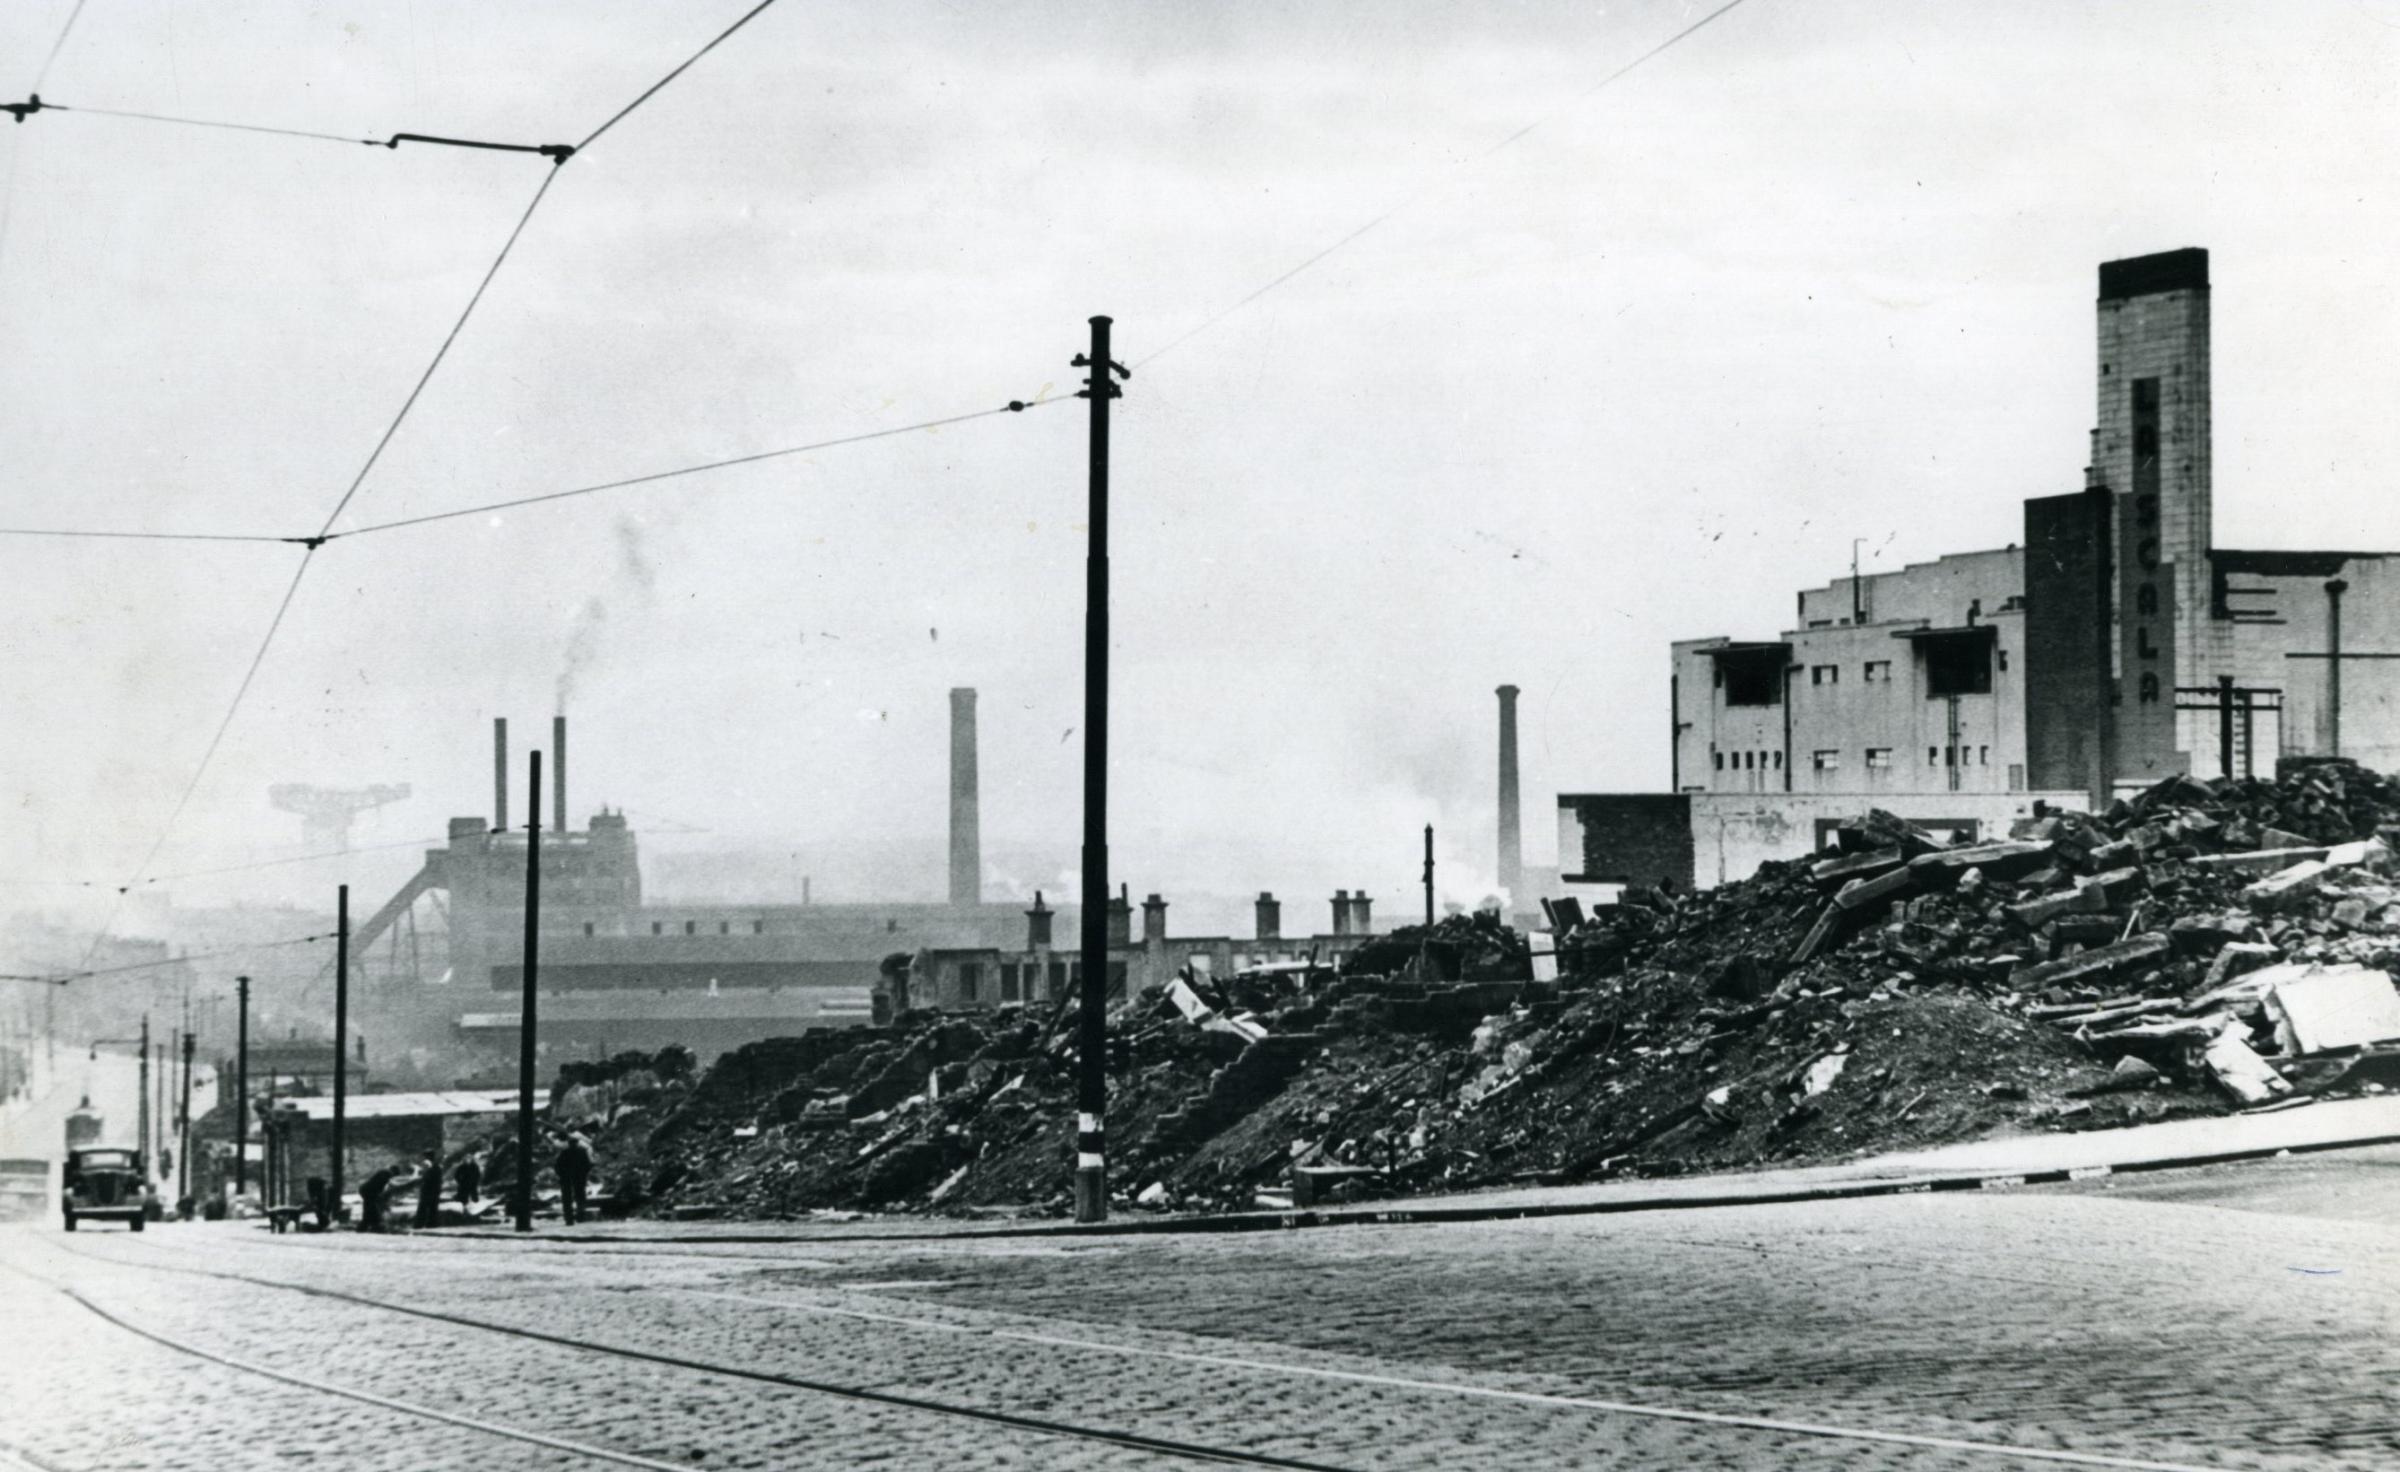 Kilbowie Road wtih La Scala Cinema in 1941. Photo courtesy West Dunbartonshire Council